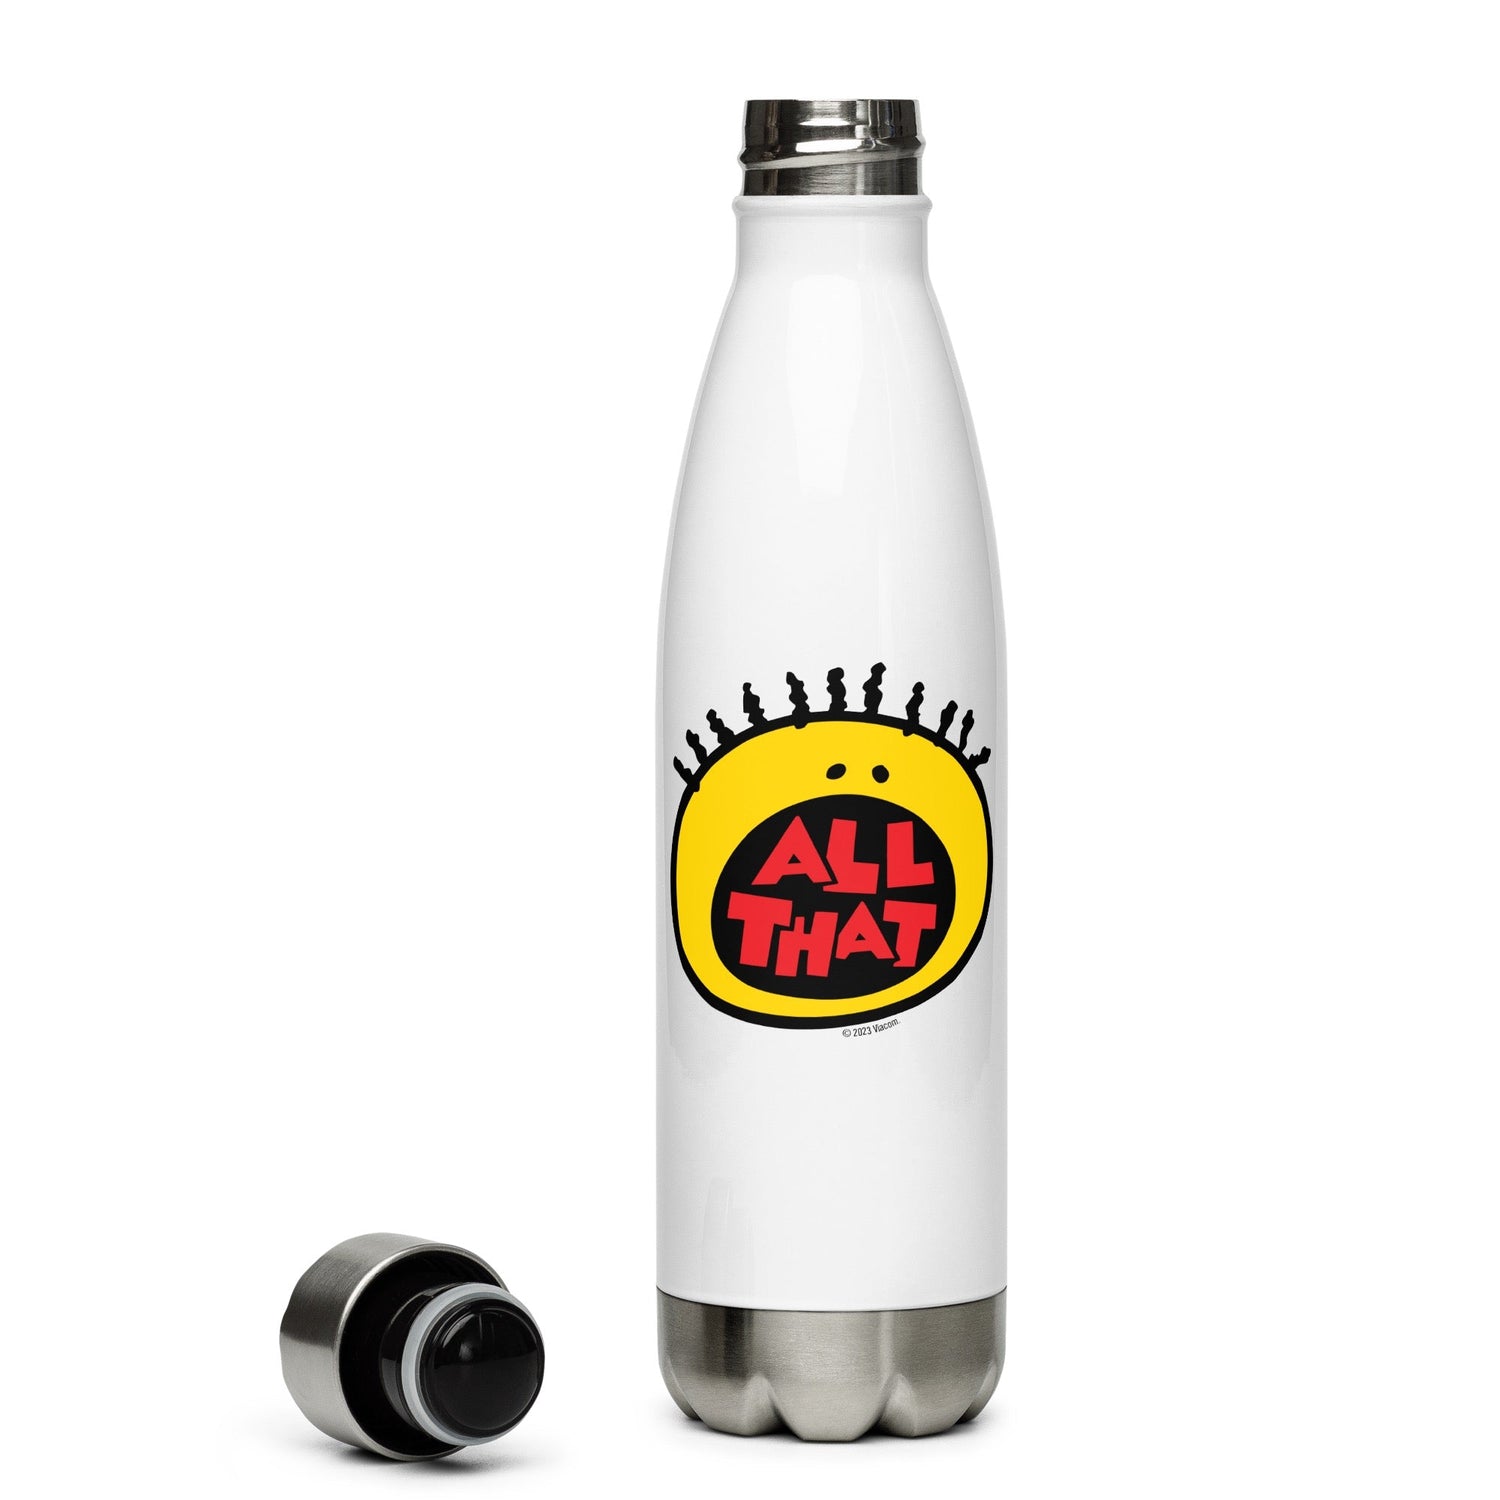 All That Original Logo Stainless Steel Water Bottle - Paramount Shop